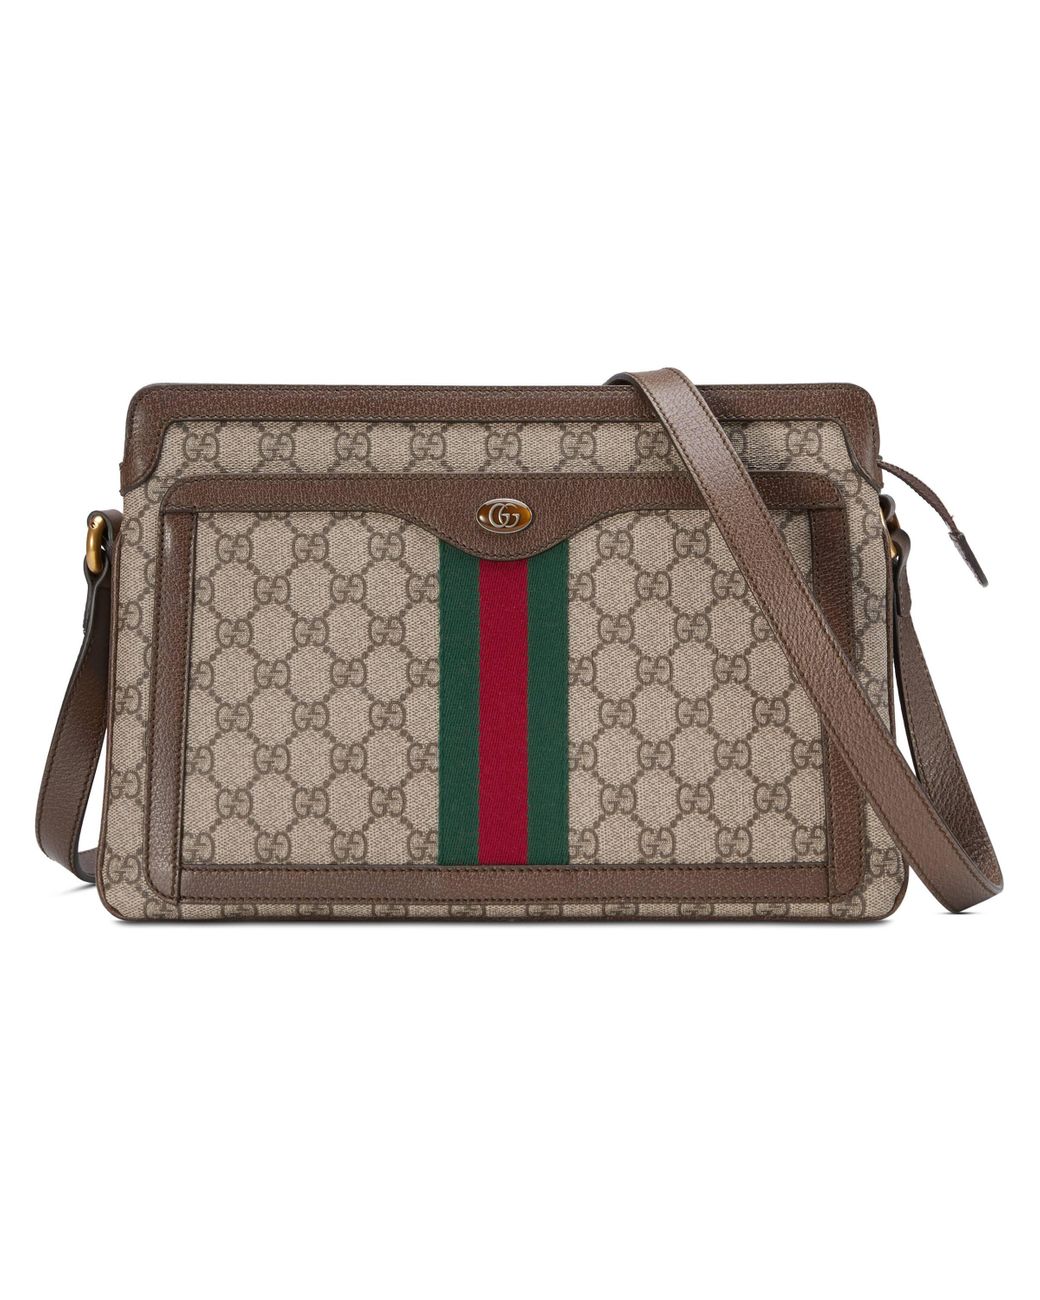 Gucci Ophidia GG Medium Shoulder Bag in Natural | Lyst